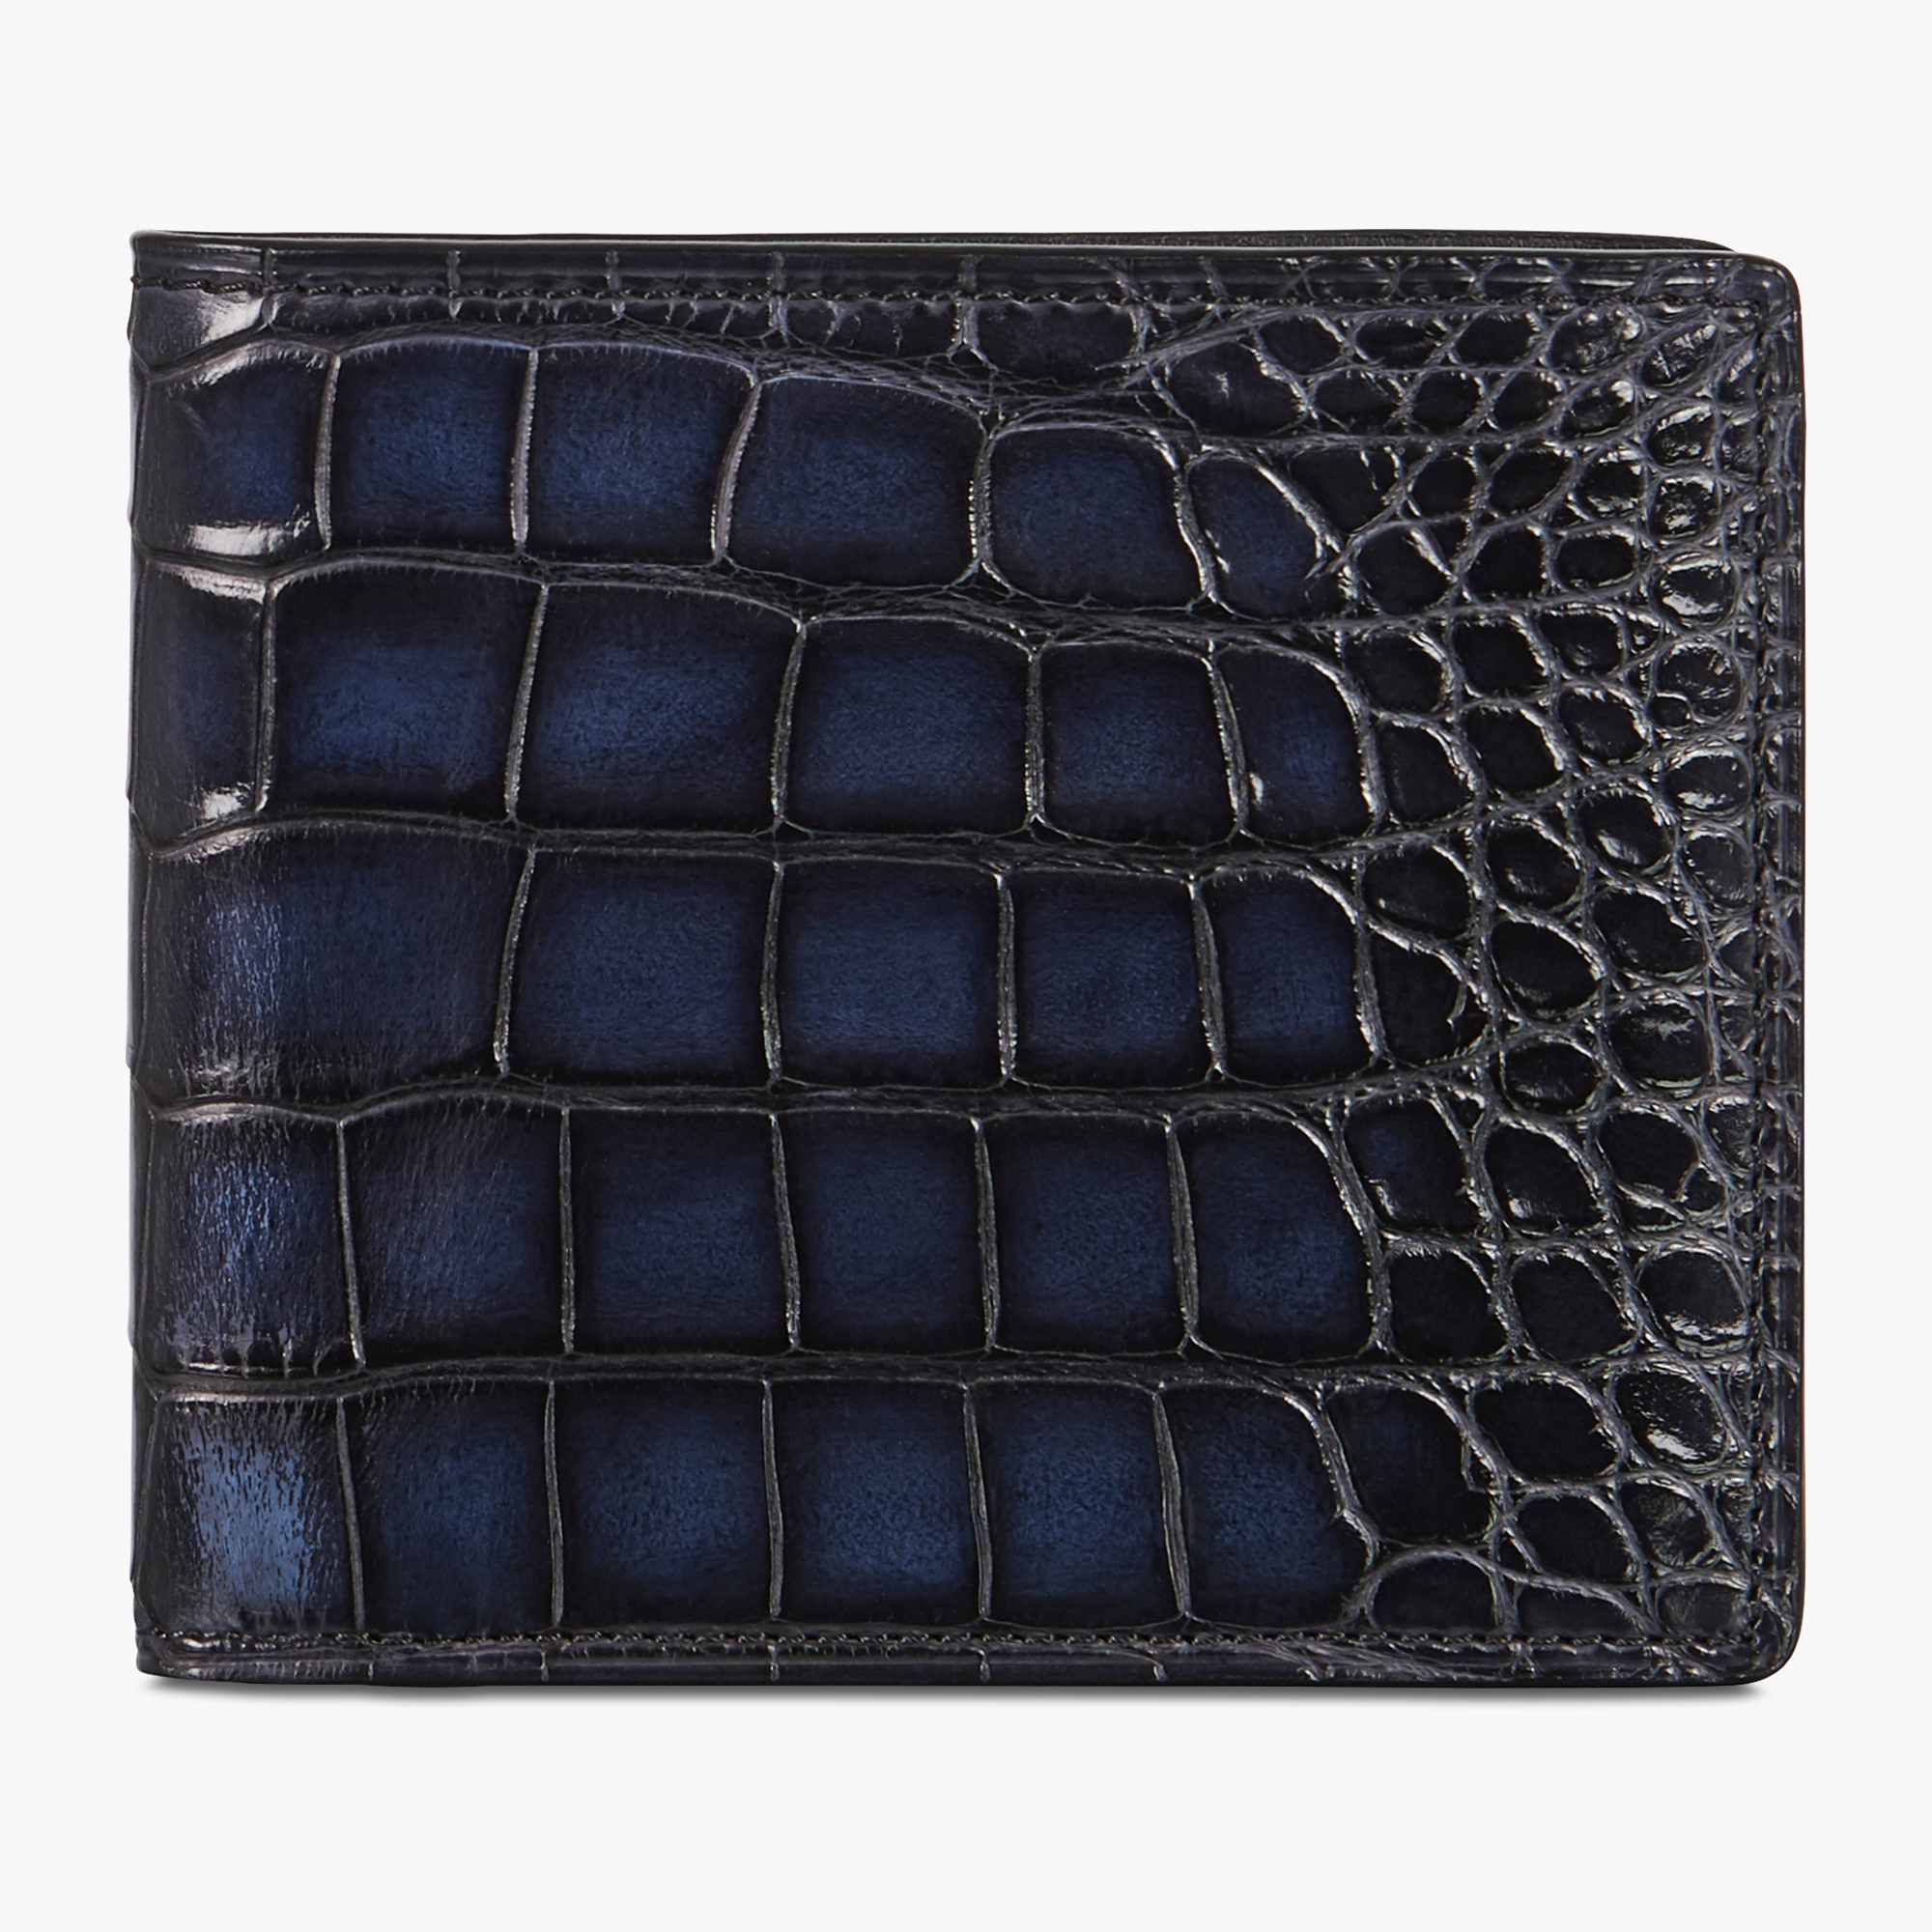 Makore Alligator Leather Compact Wallet, NERO BLU, hi-res